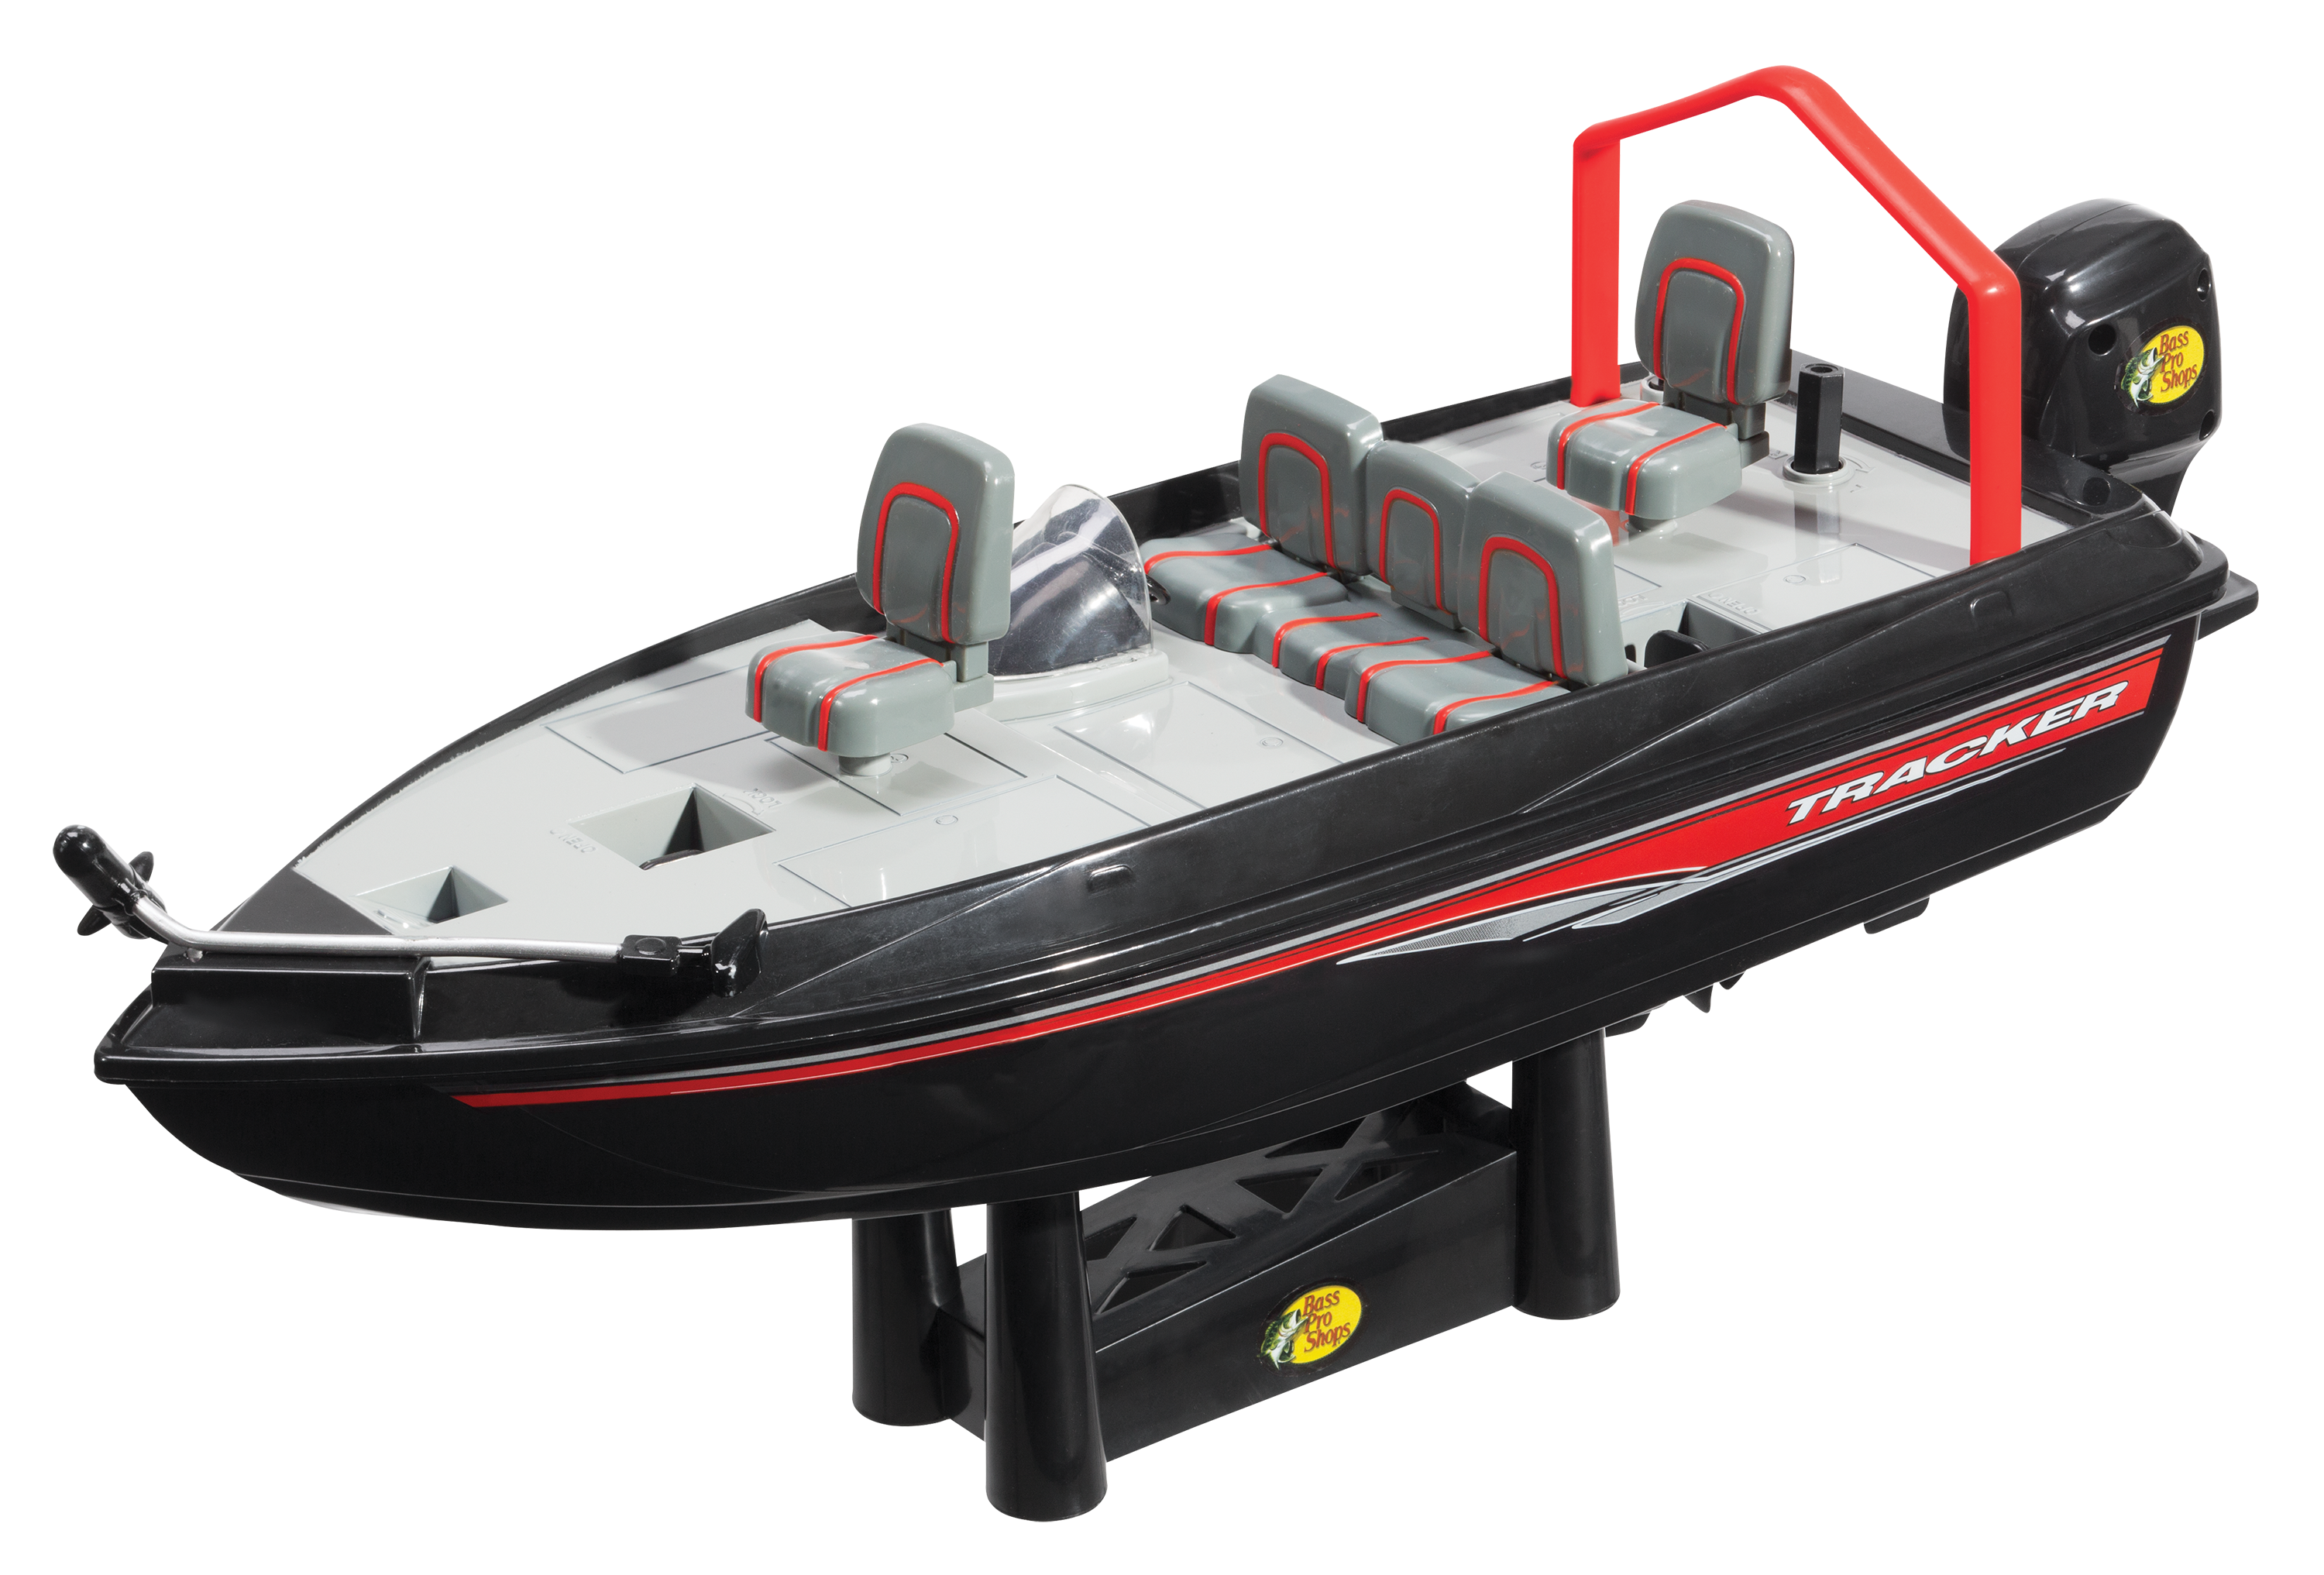 Bass Pro Shops Tracker Remote Control Fishing Boat